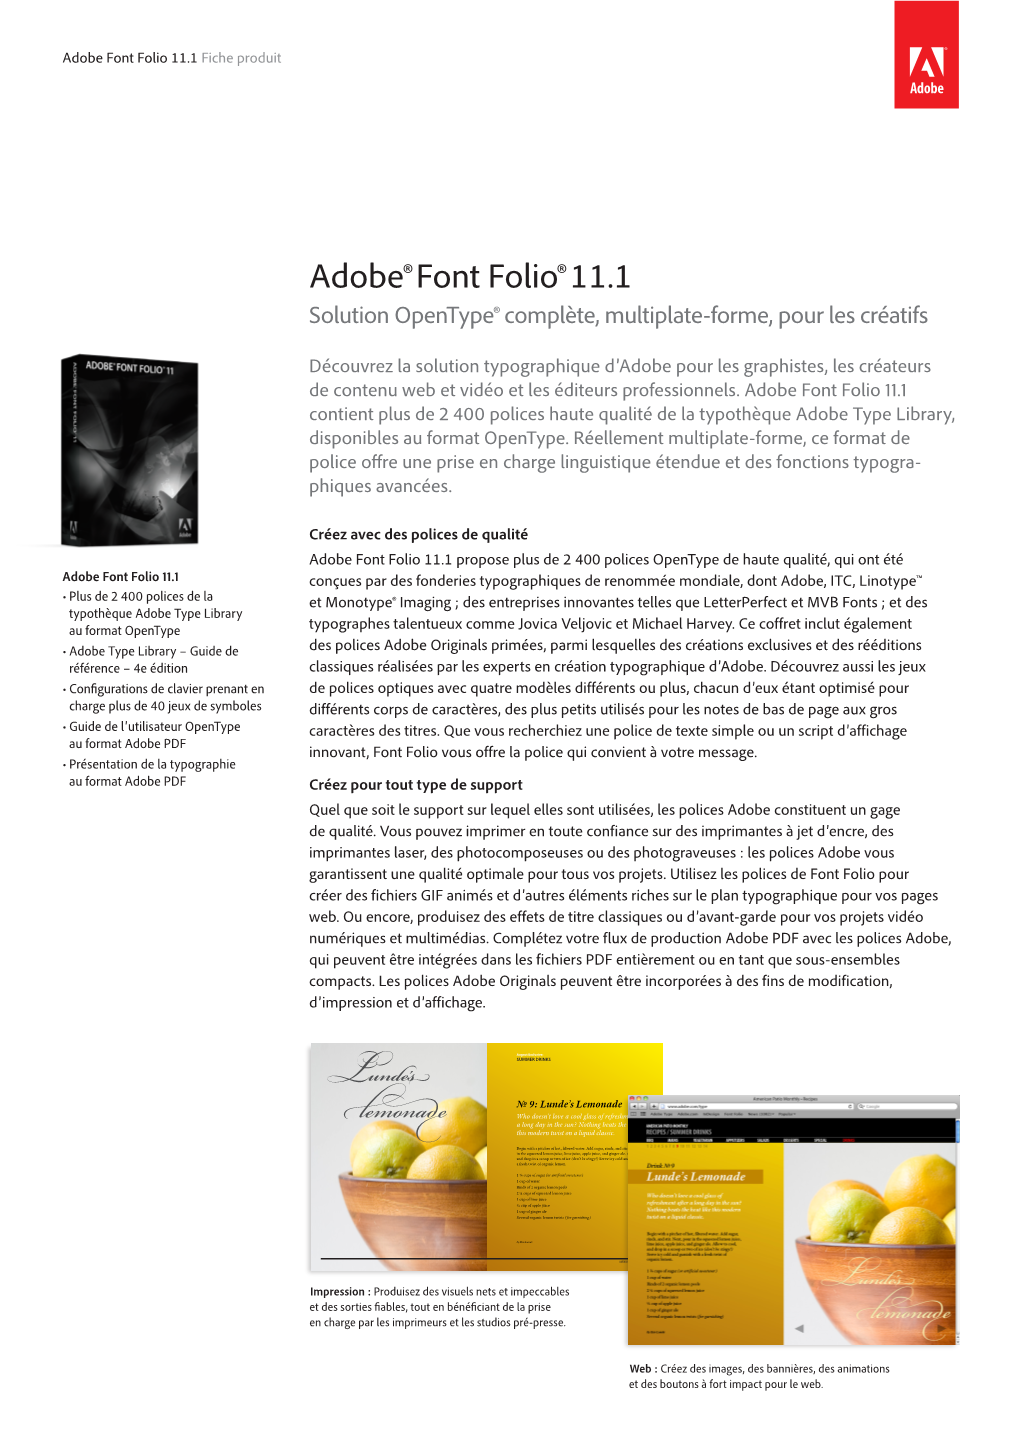 Adobe Font Folio 11.1 Fiche Produit